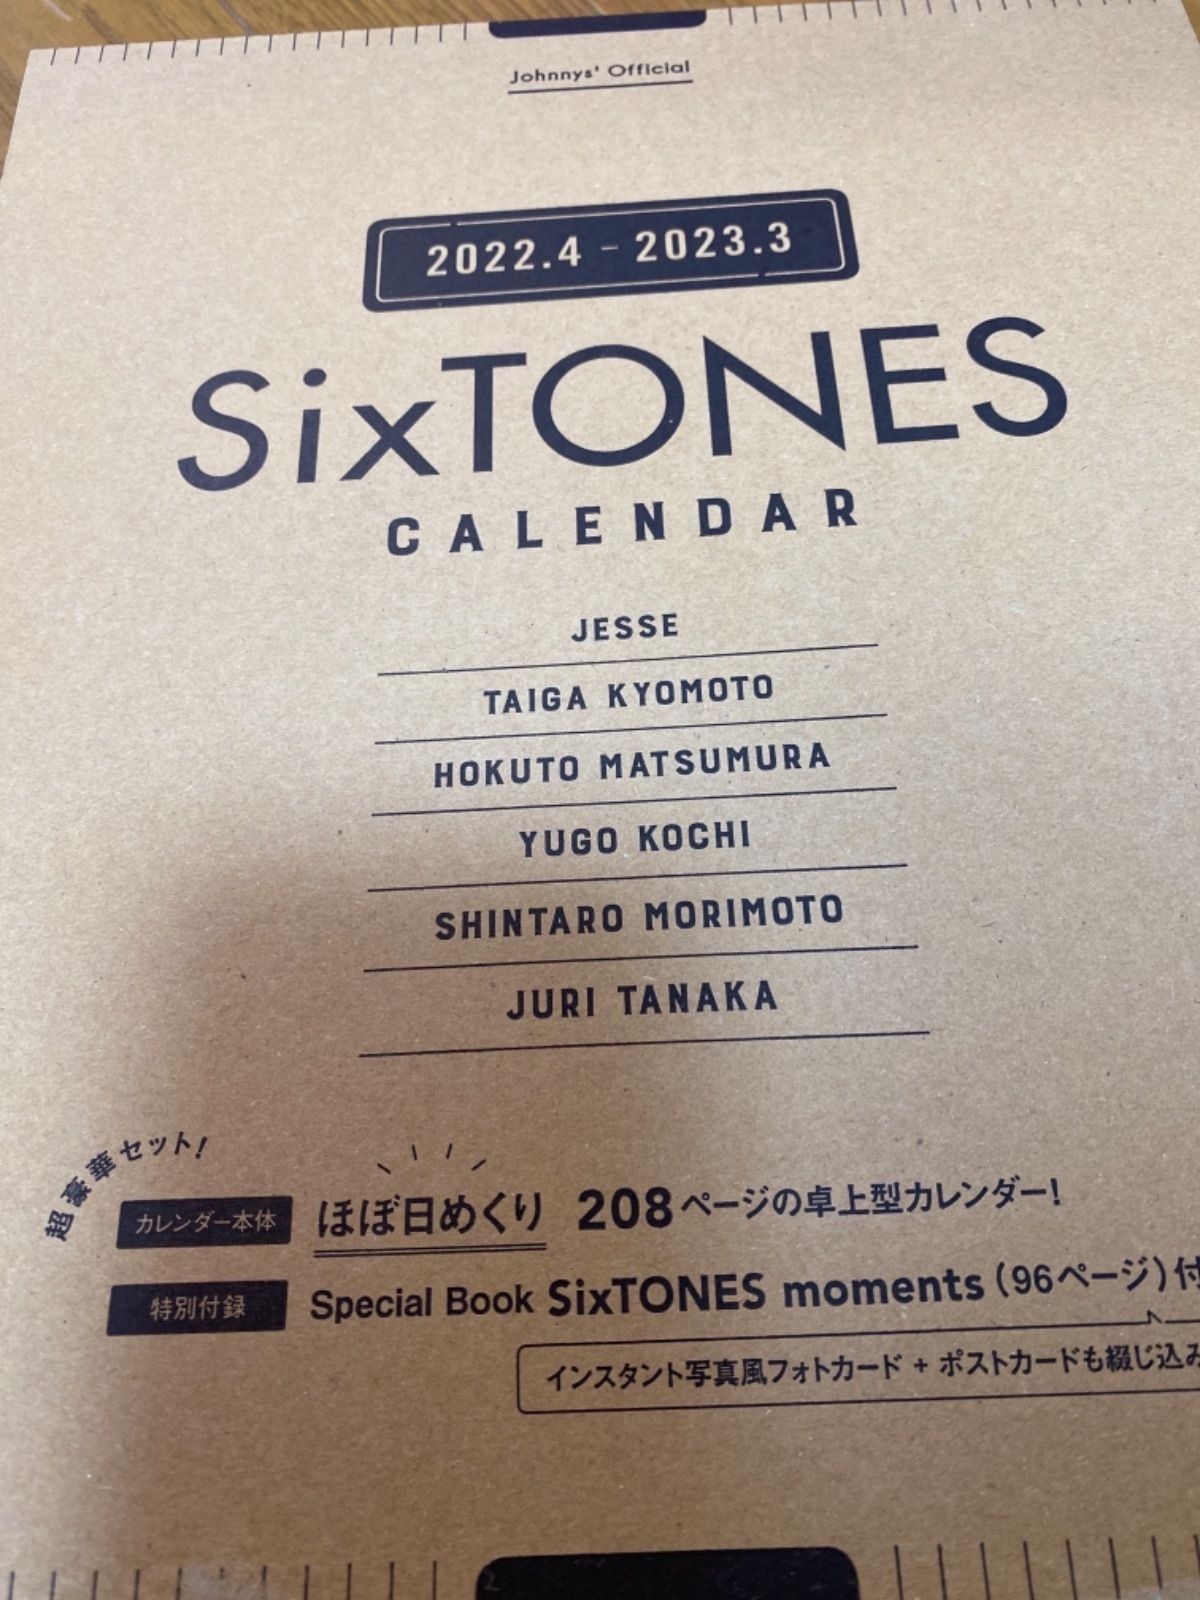 sixtones カレンダー 2022.4〜2023.3 - メルカリ